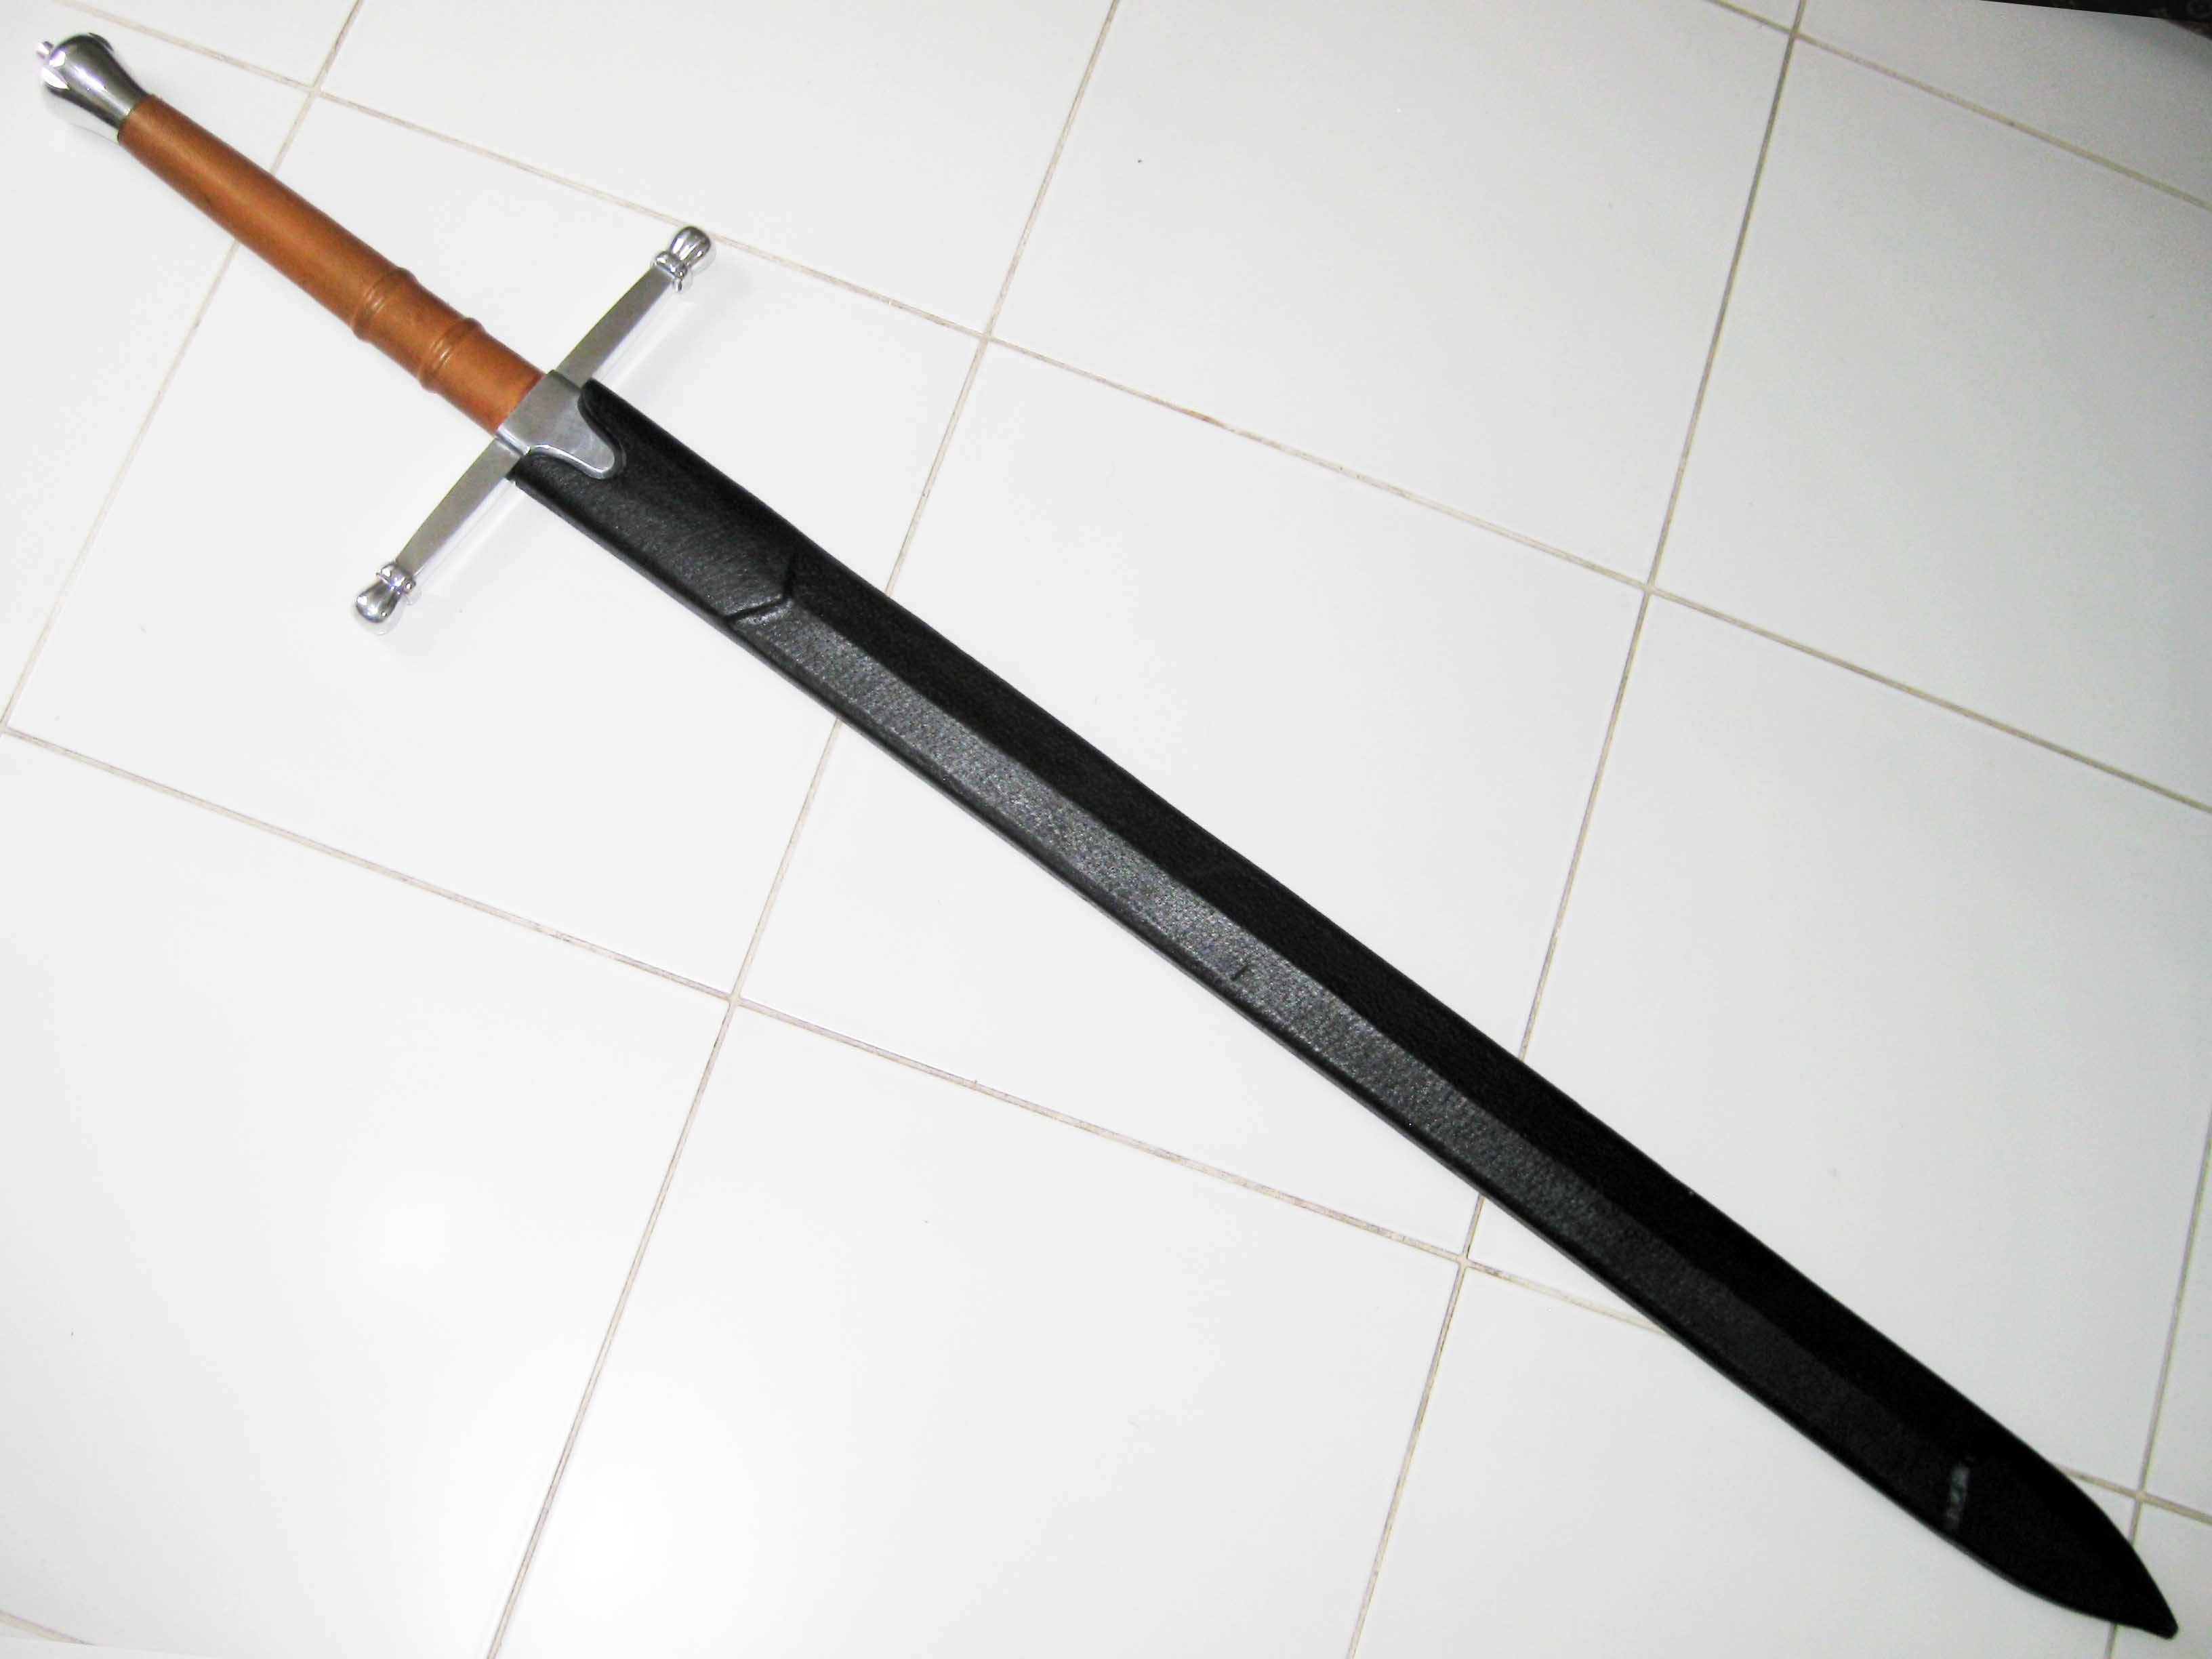 Braveheart 52" Scottish Claymore Battle Long Sword